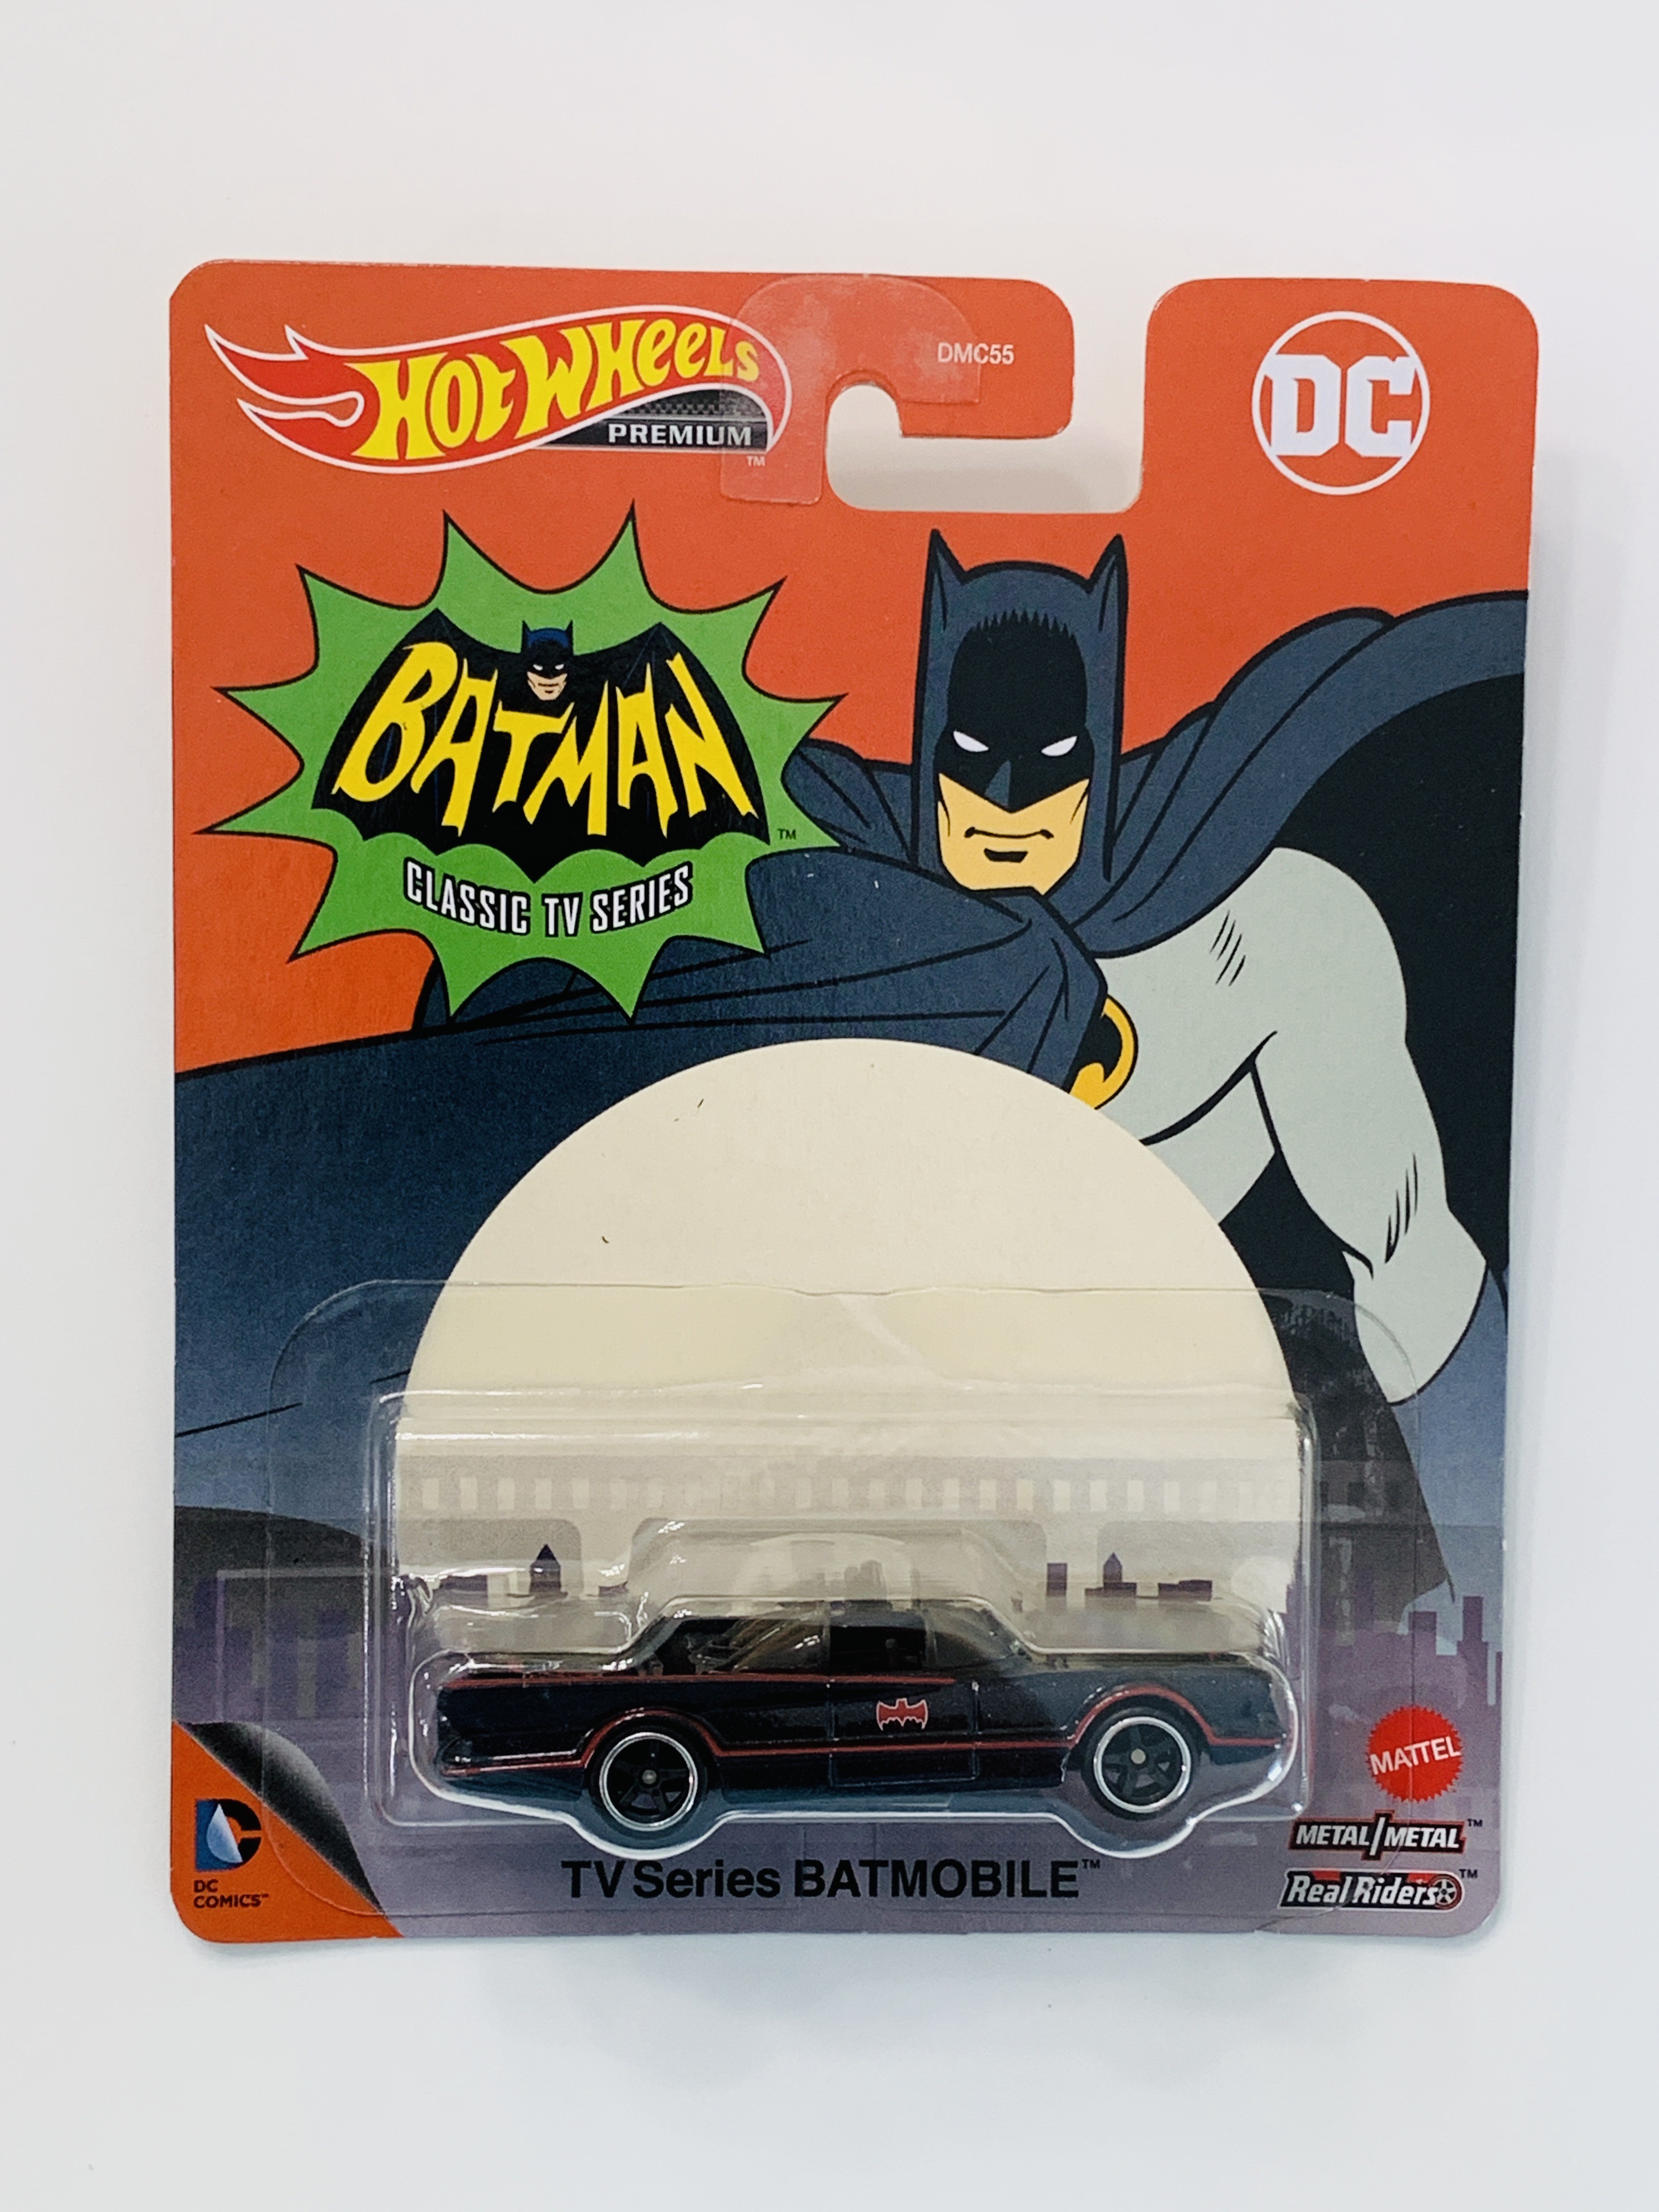 Hot Wheels Premium DC Comics Batman TV Series Batmobile